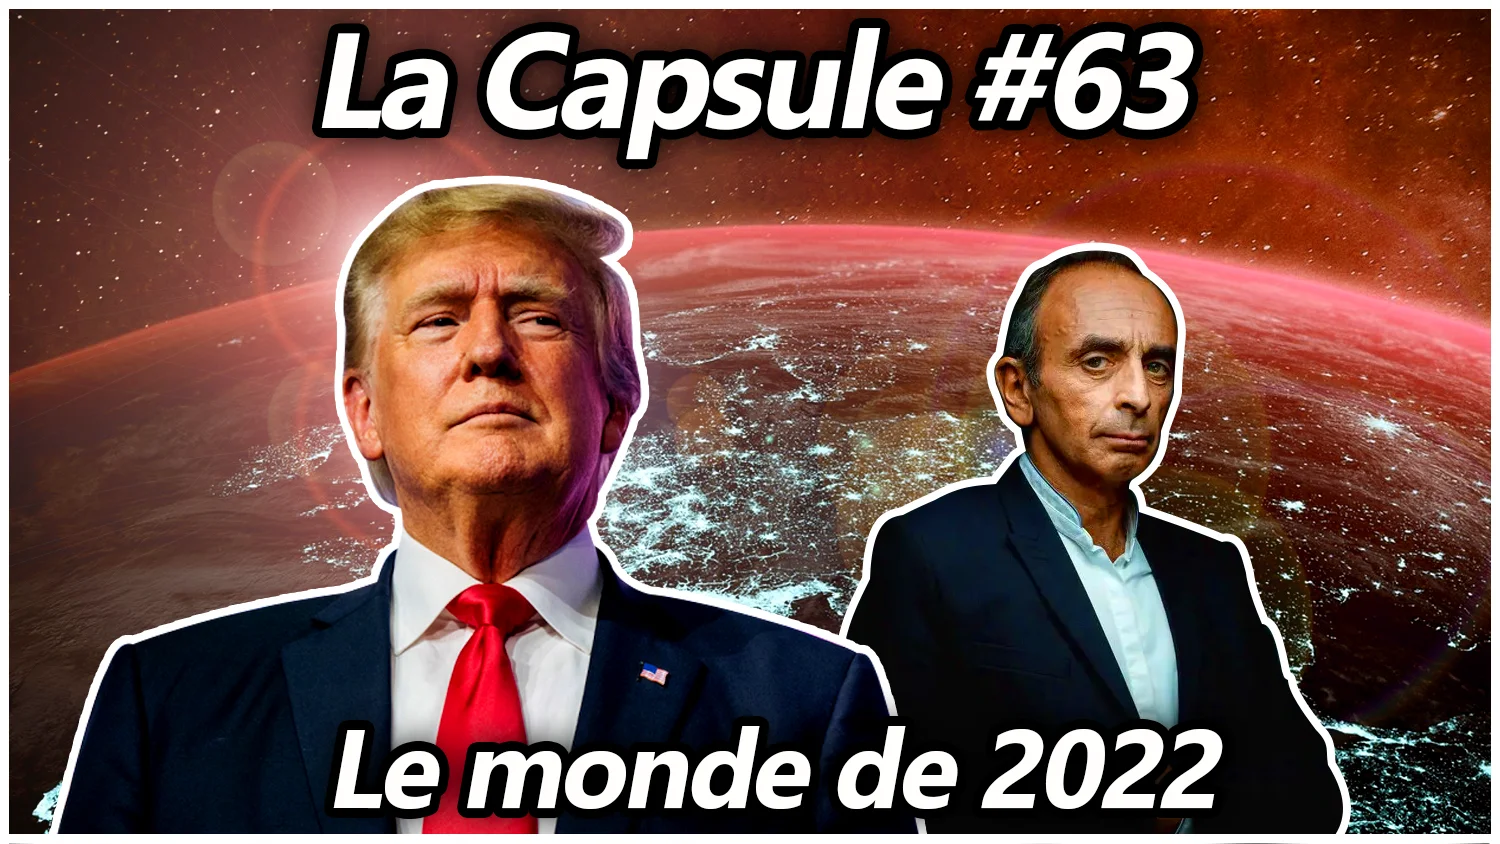 La Capsule #63 – Le monde de 2022